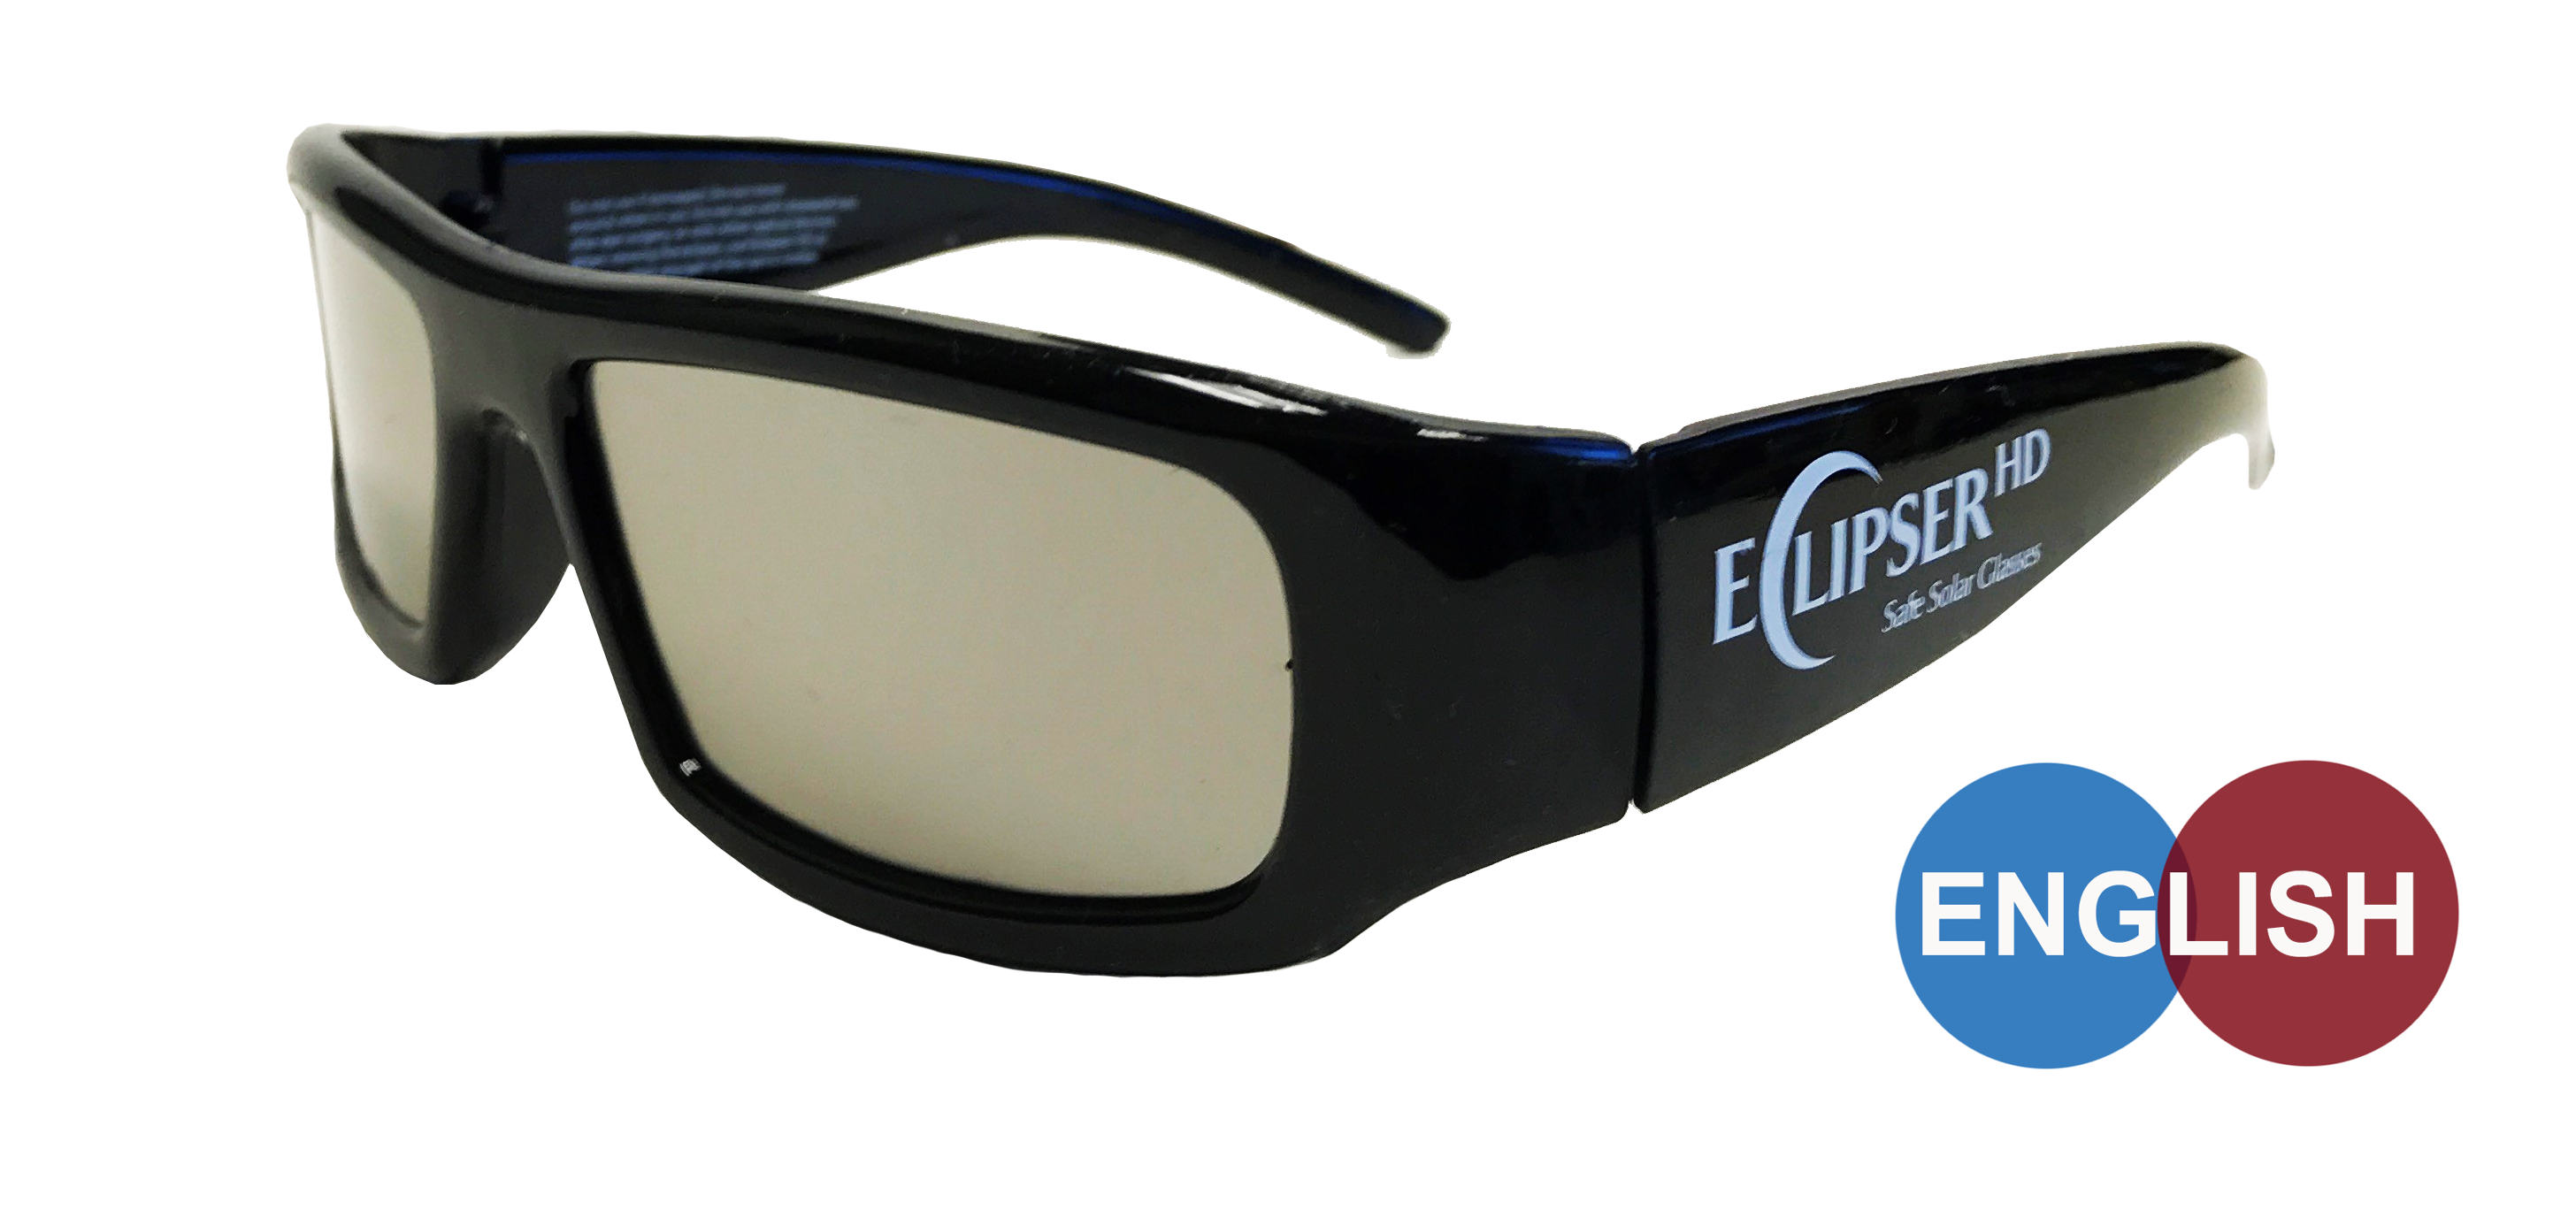 Plastic Eclipse Glasses, Best Eclipse Glasses